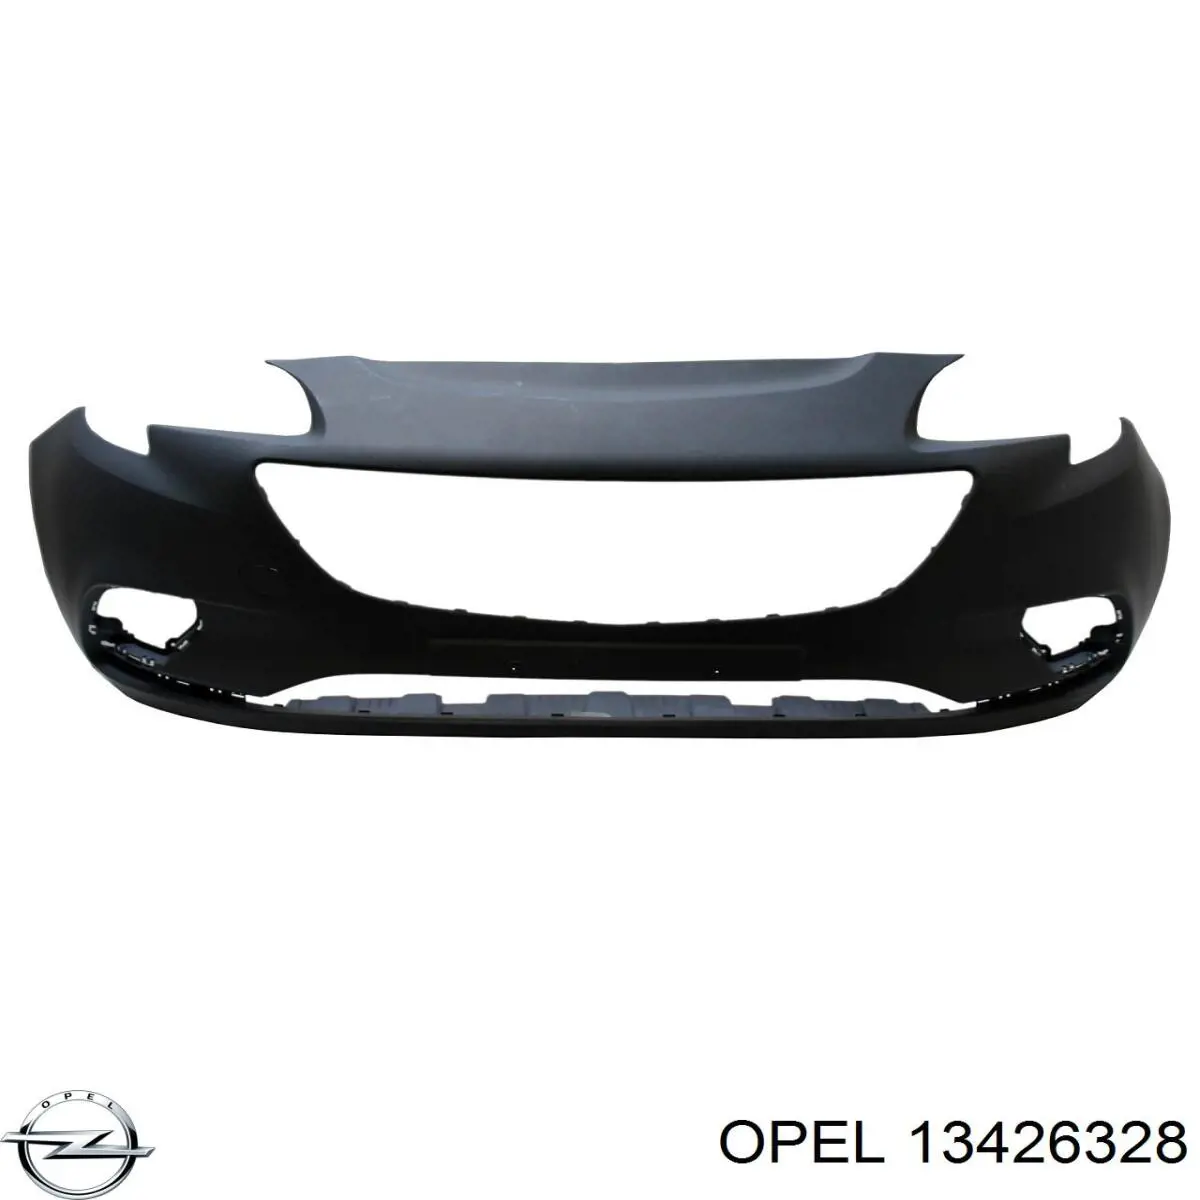 13426328 Opel refuerzo parachoque delantero